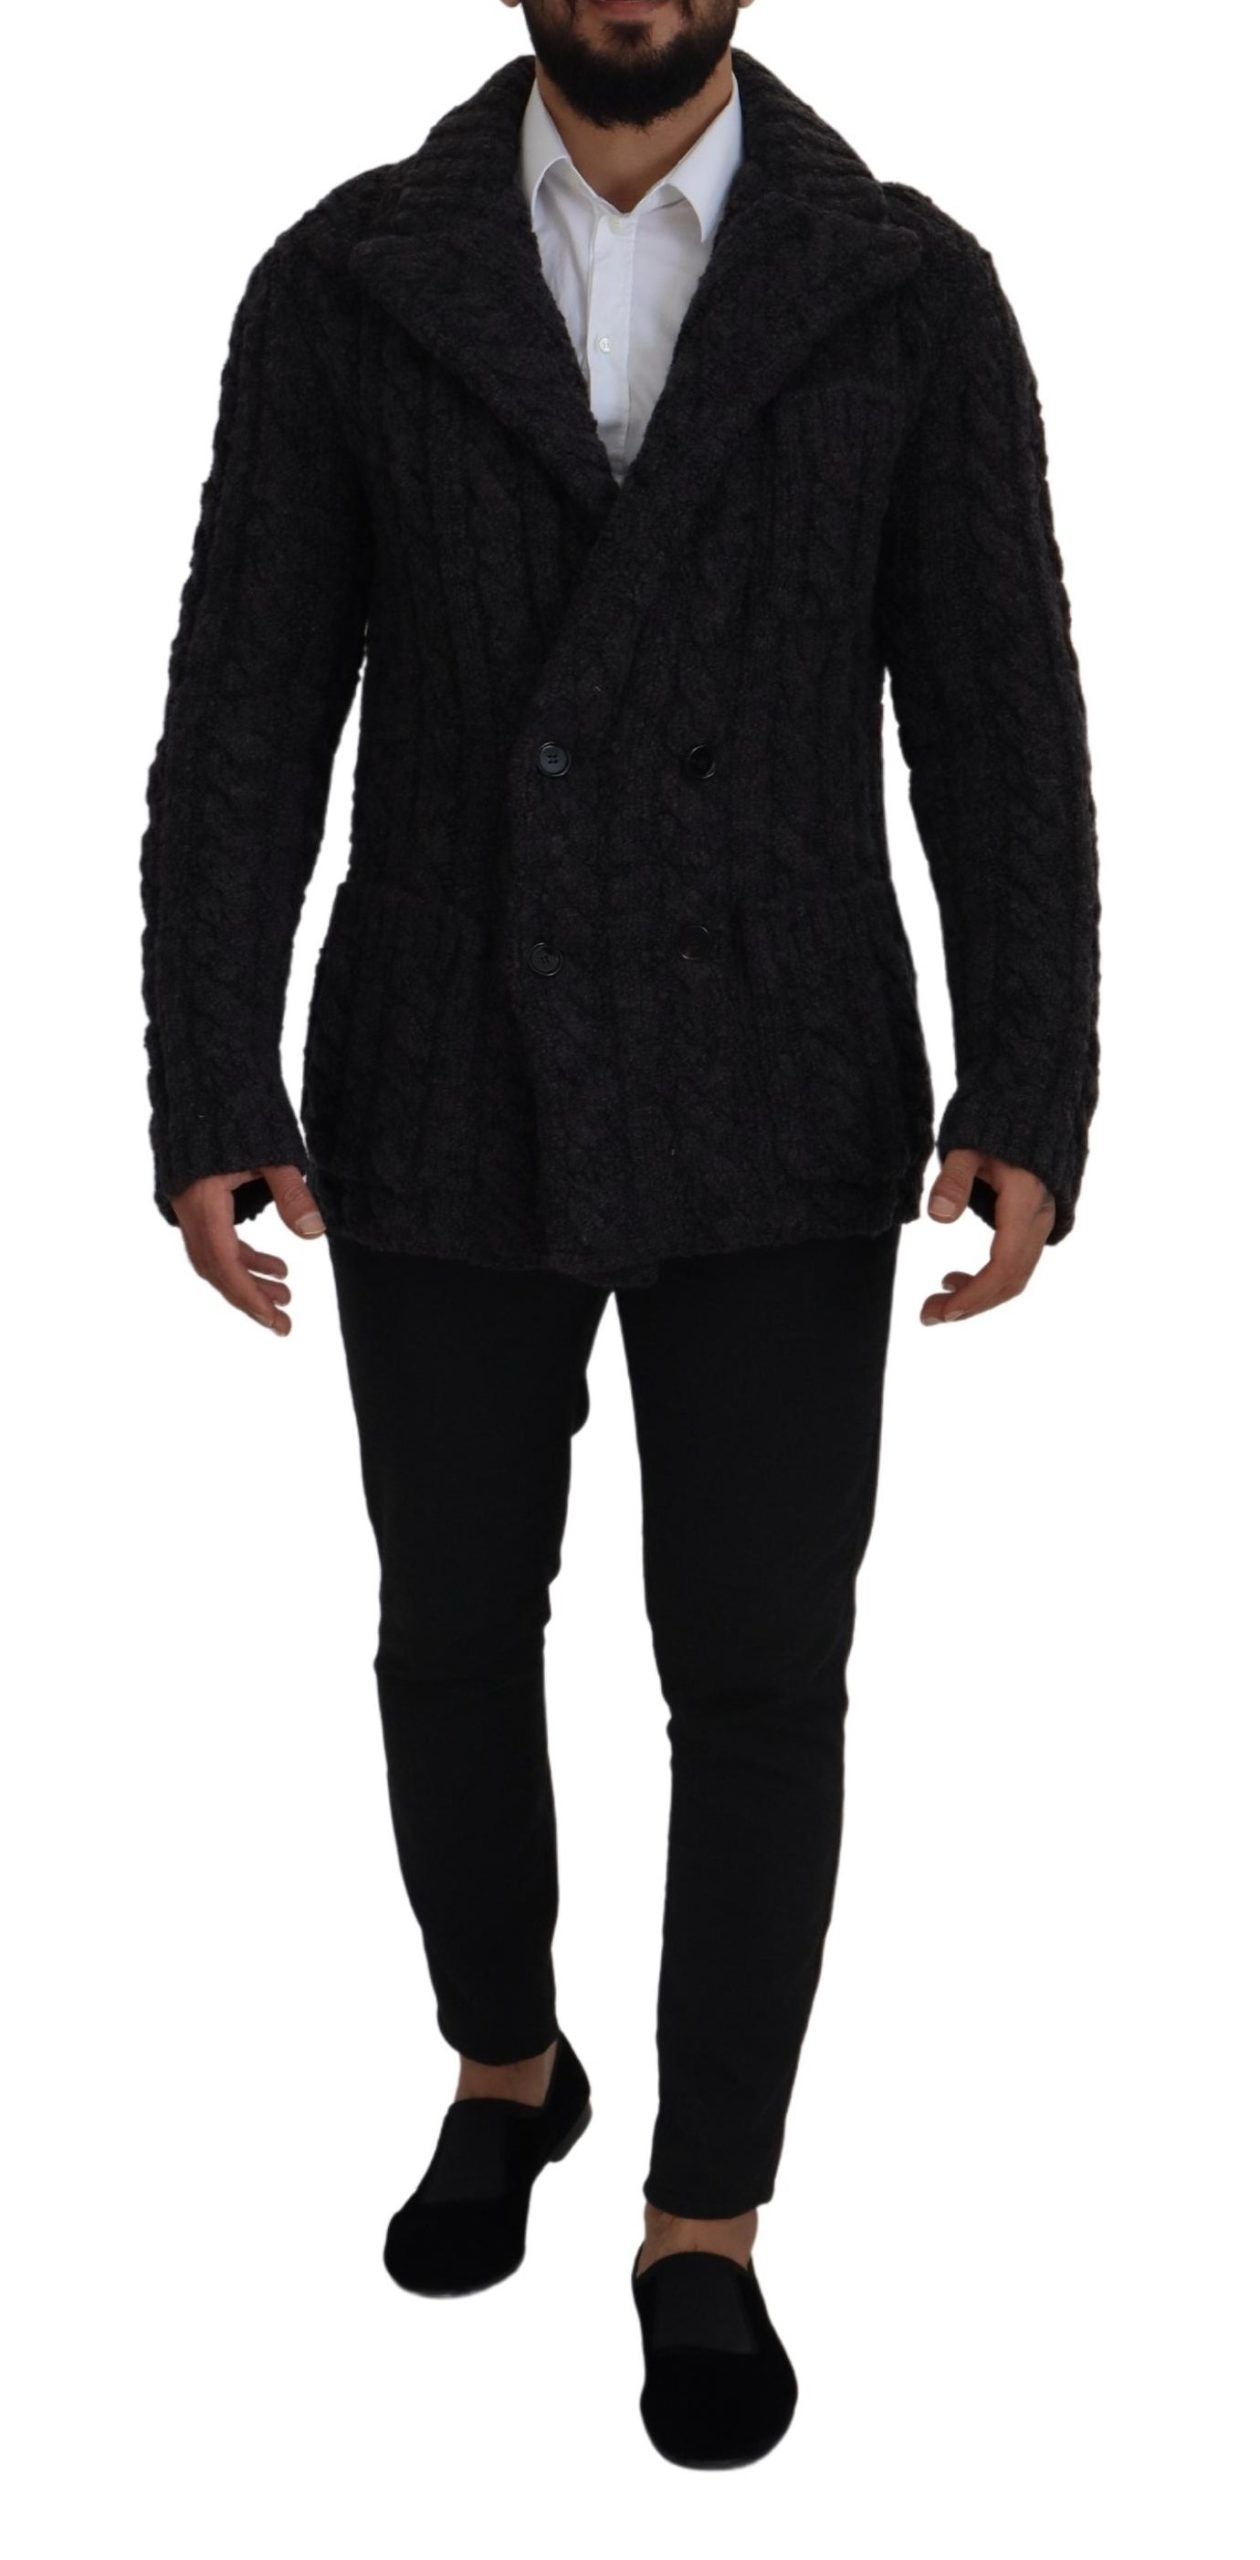 Dolce & Gabbana Black Wool Knit Double Breasted Coat Jacket